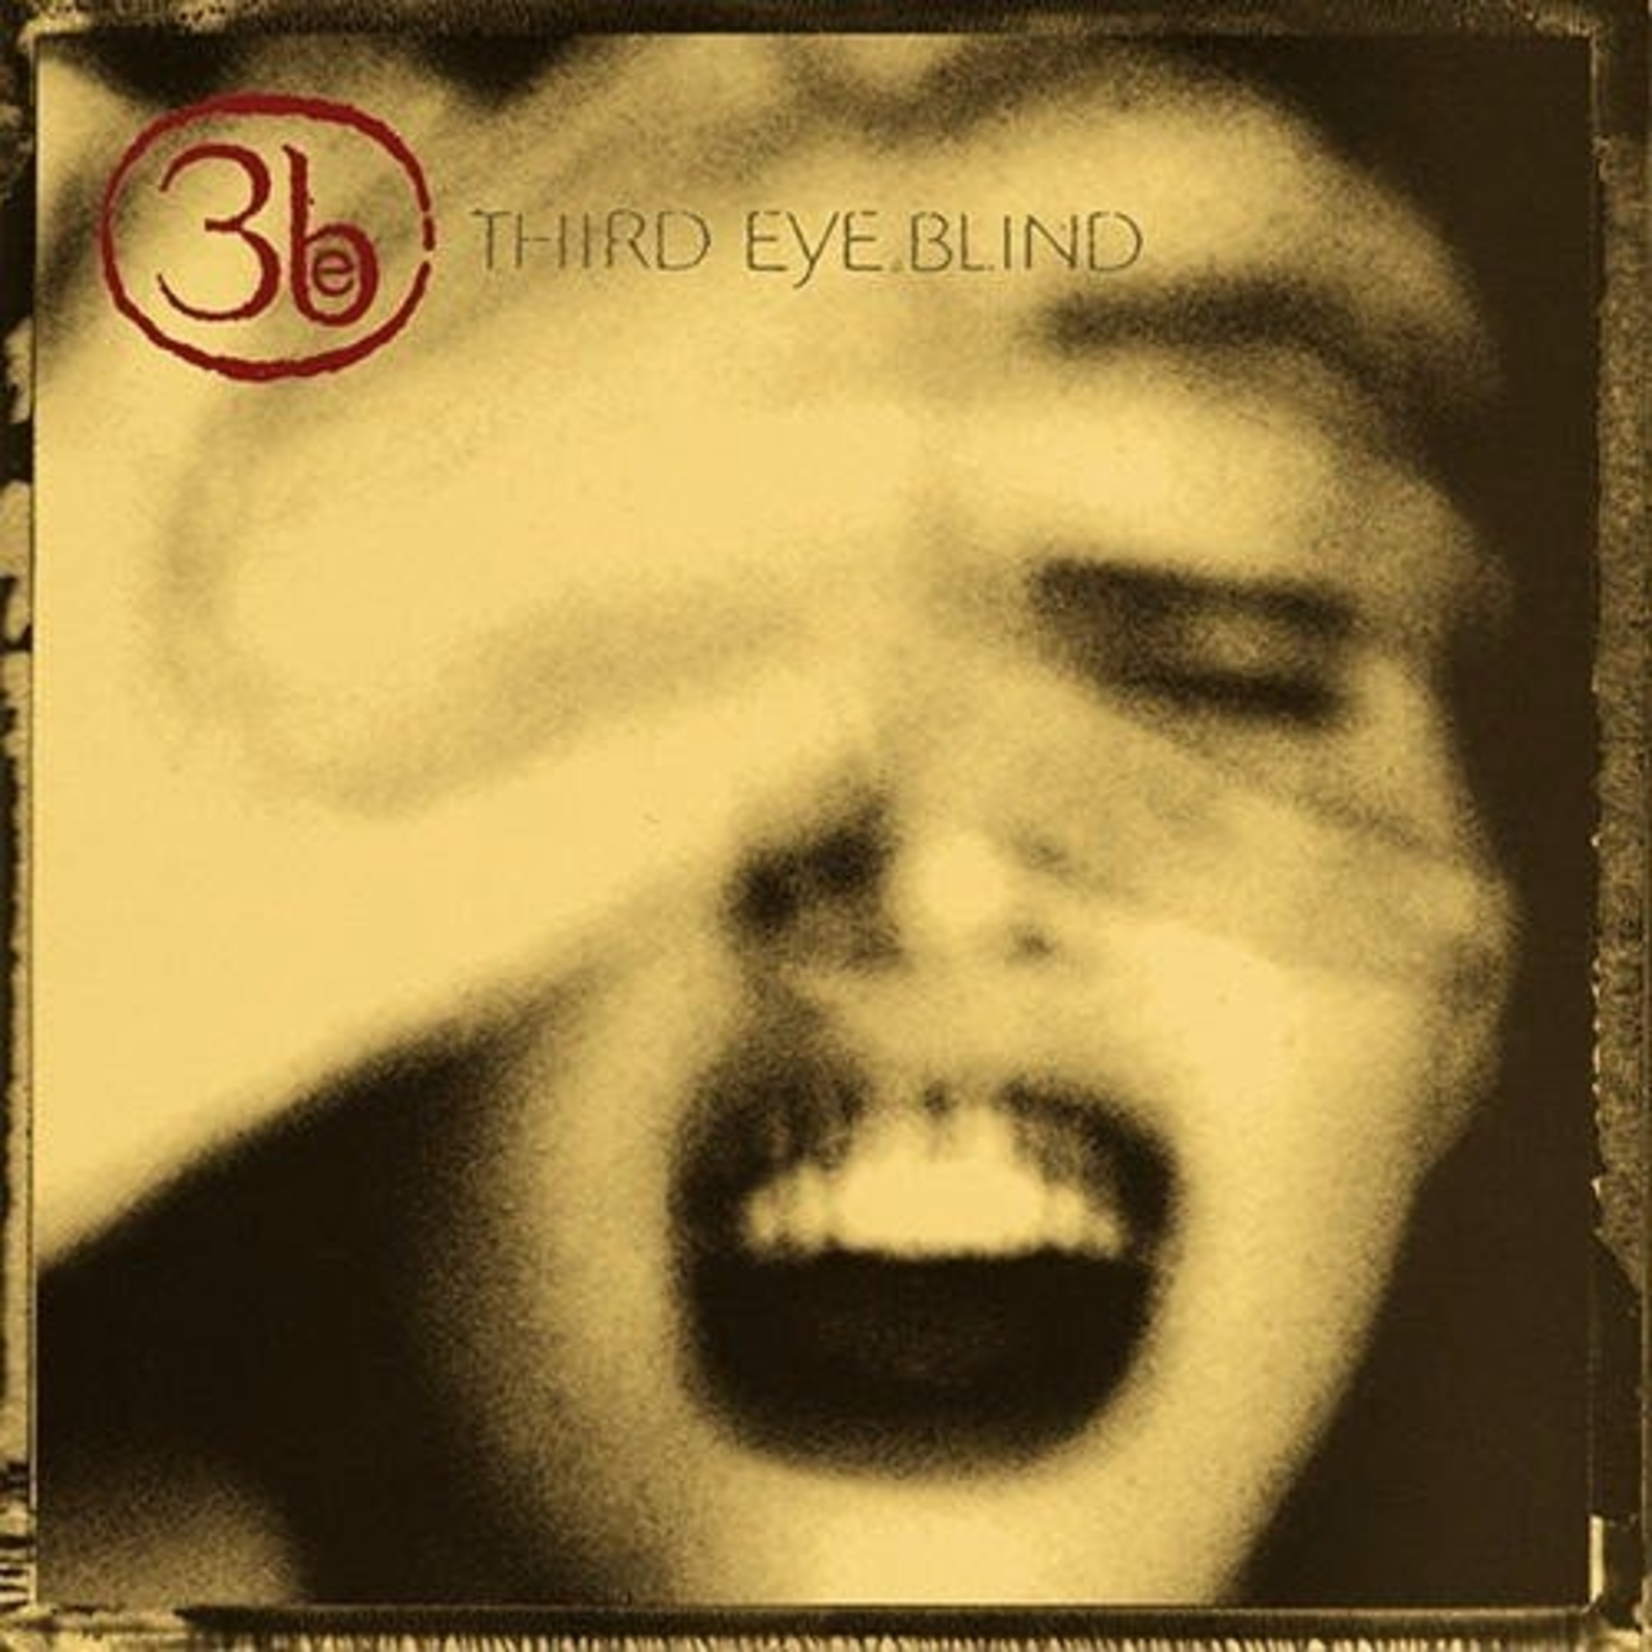 [New] Third Eye Blind - self-titled (2LP, 25th Anniversary, gold vinyl, indie exclusive)